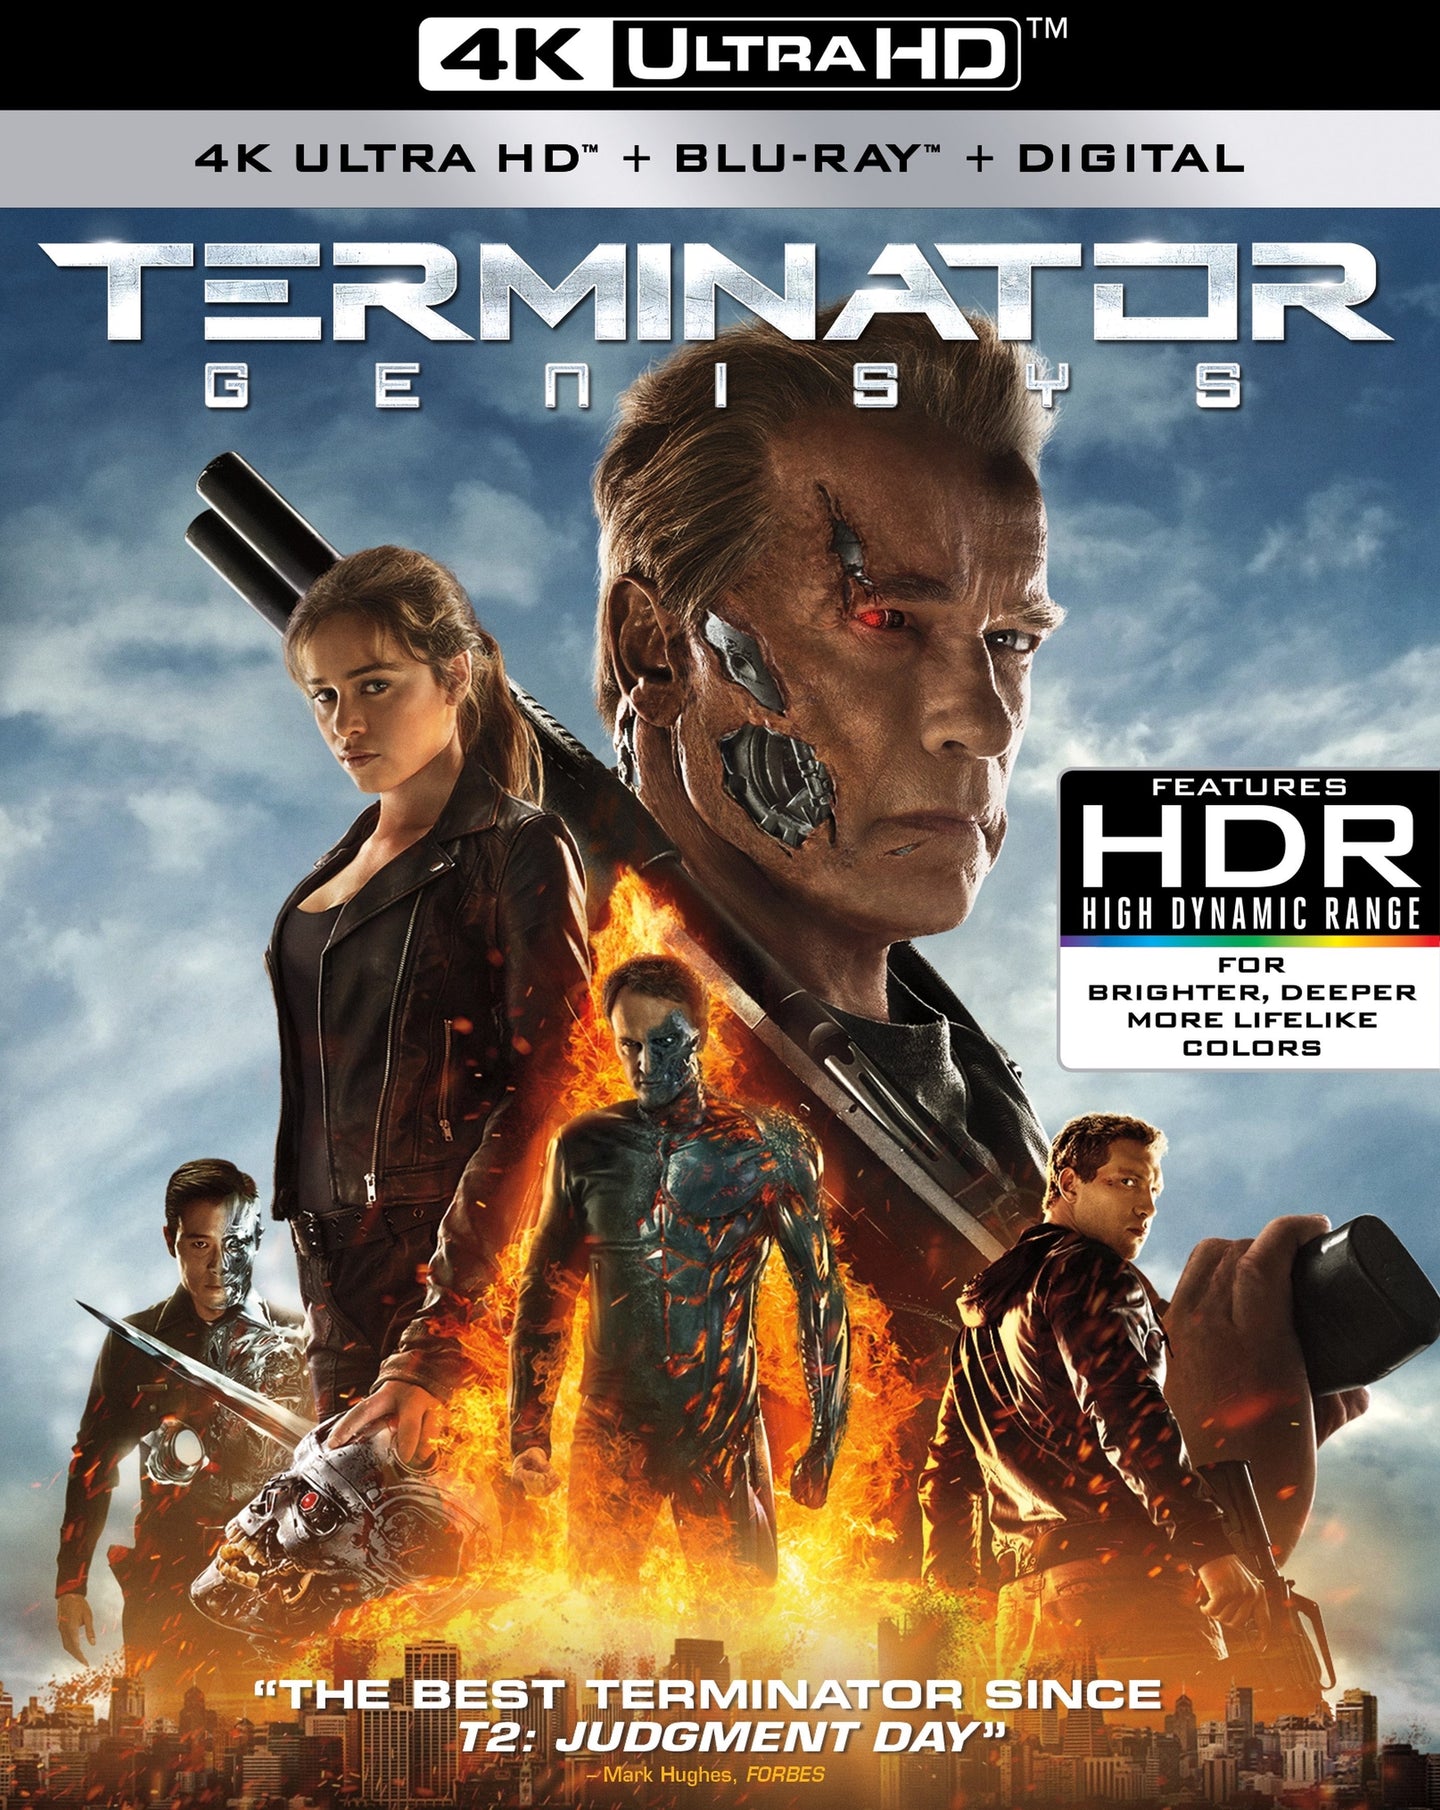 Terminator: Genisys (2015) iTunes 4K redemption only